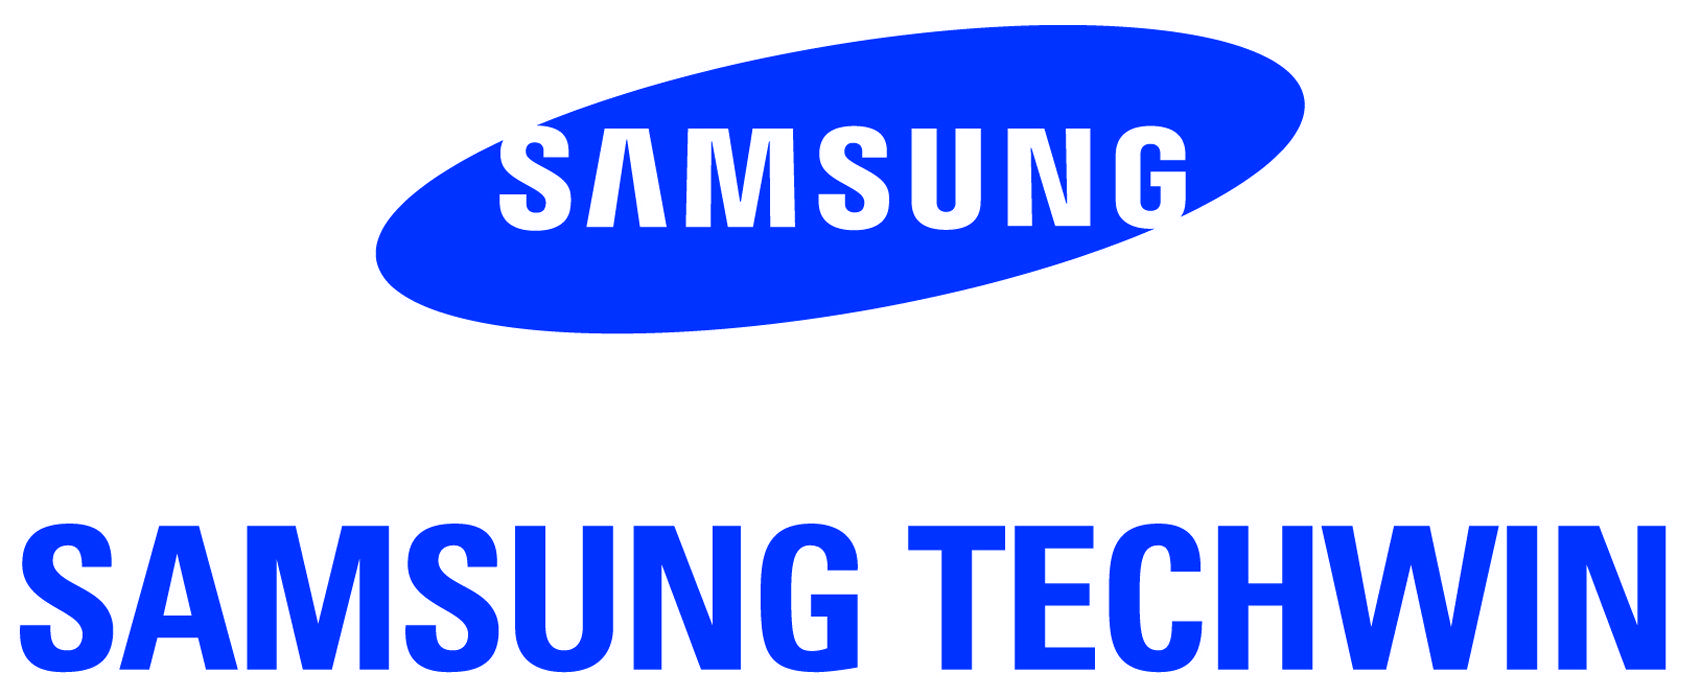 New Samsung 2017 Logo - Samsung Temporarily Allows Hanwha Techwin to Use Samsung Logo until ...